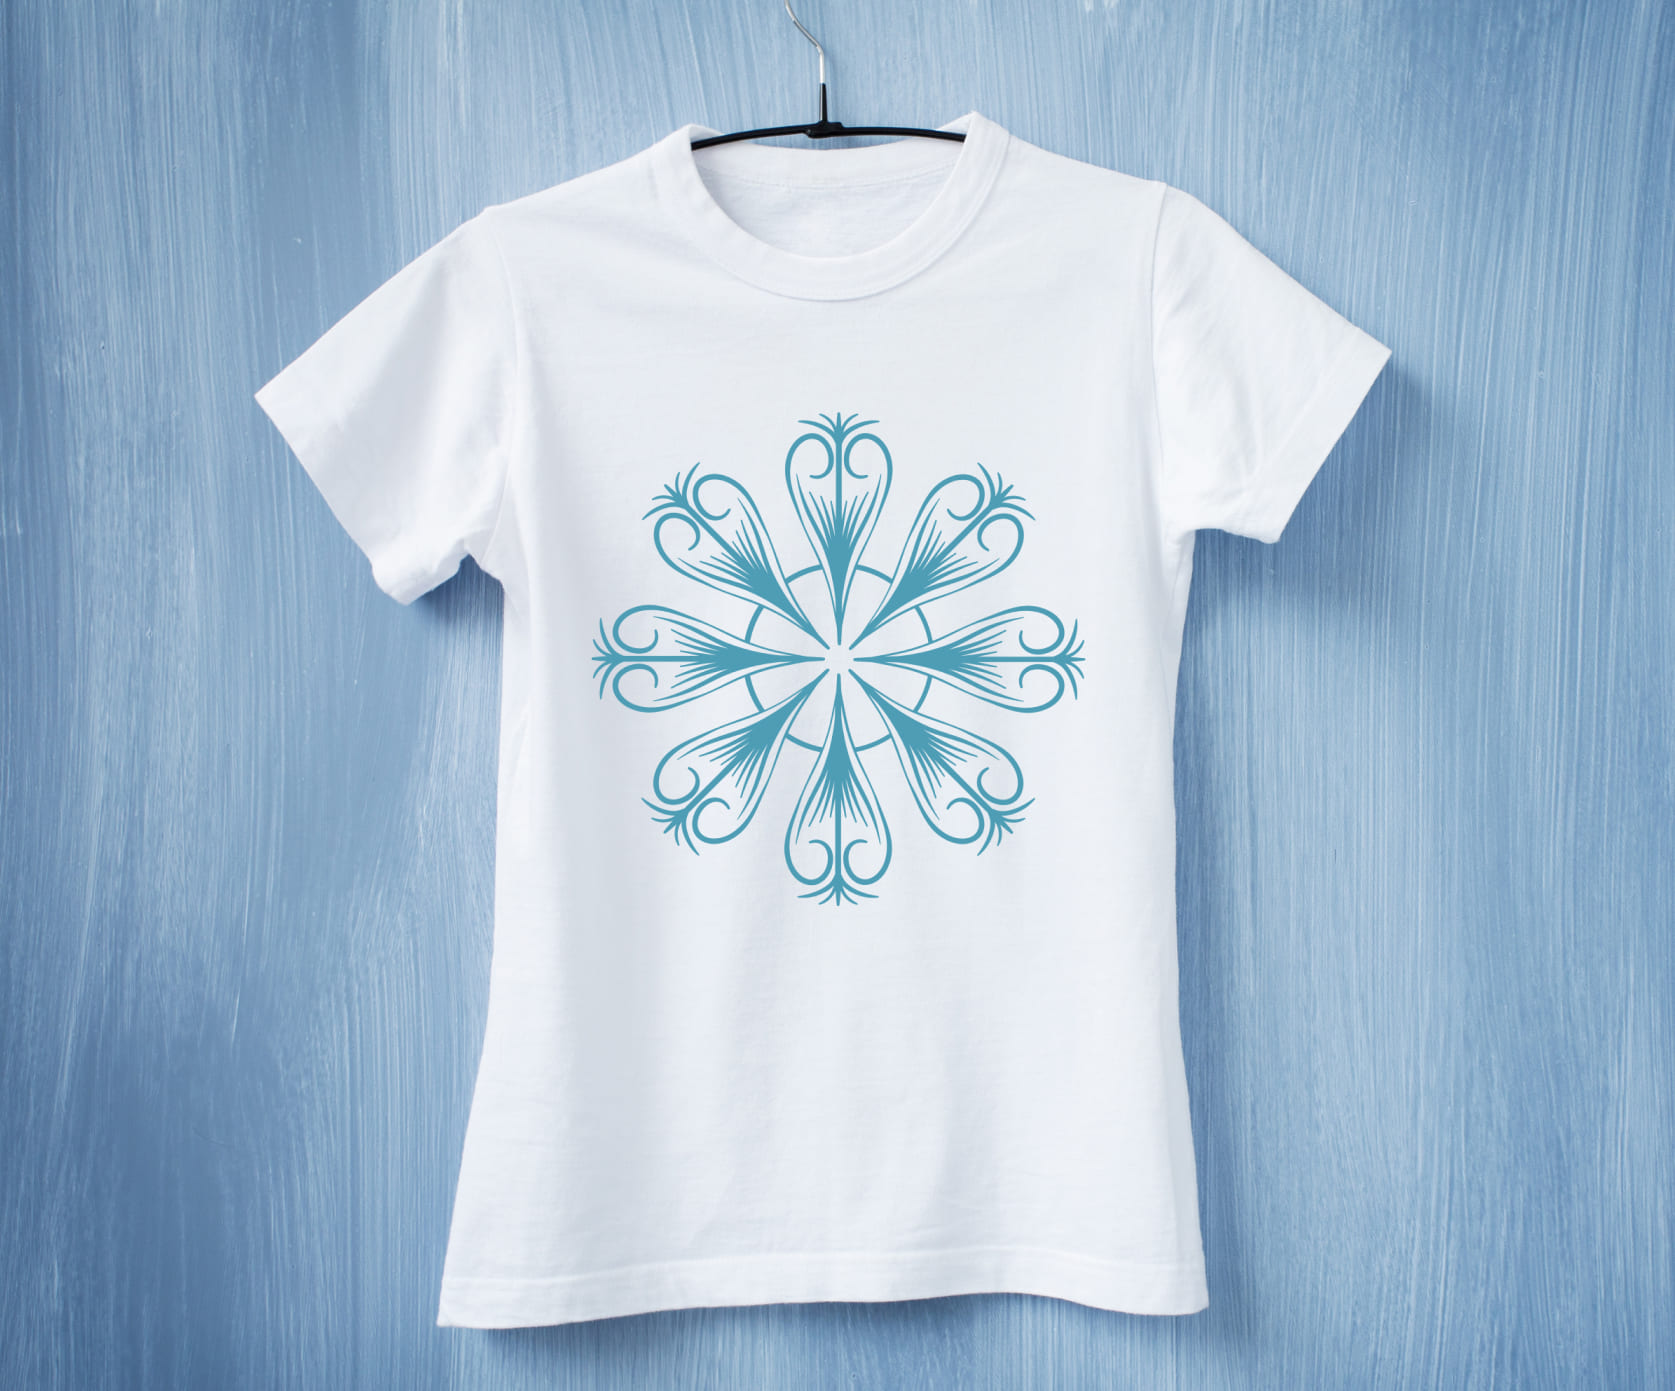 Blossom blue snowflake for t-shirt.